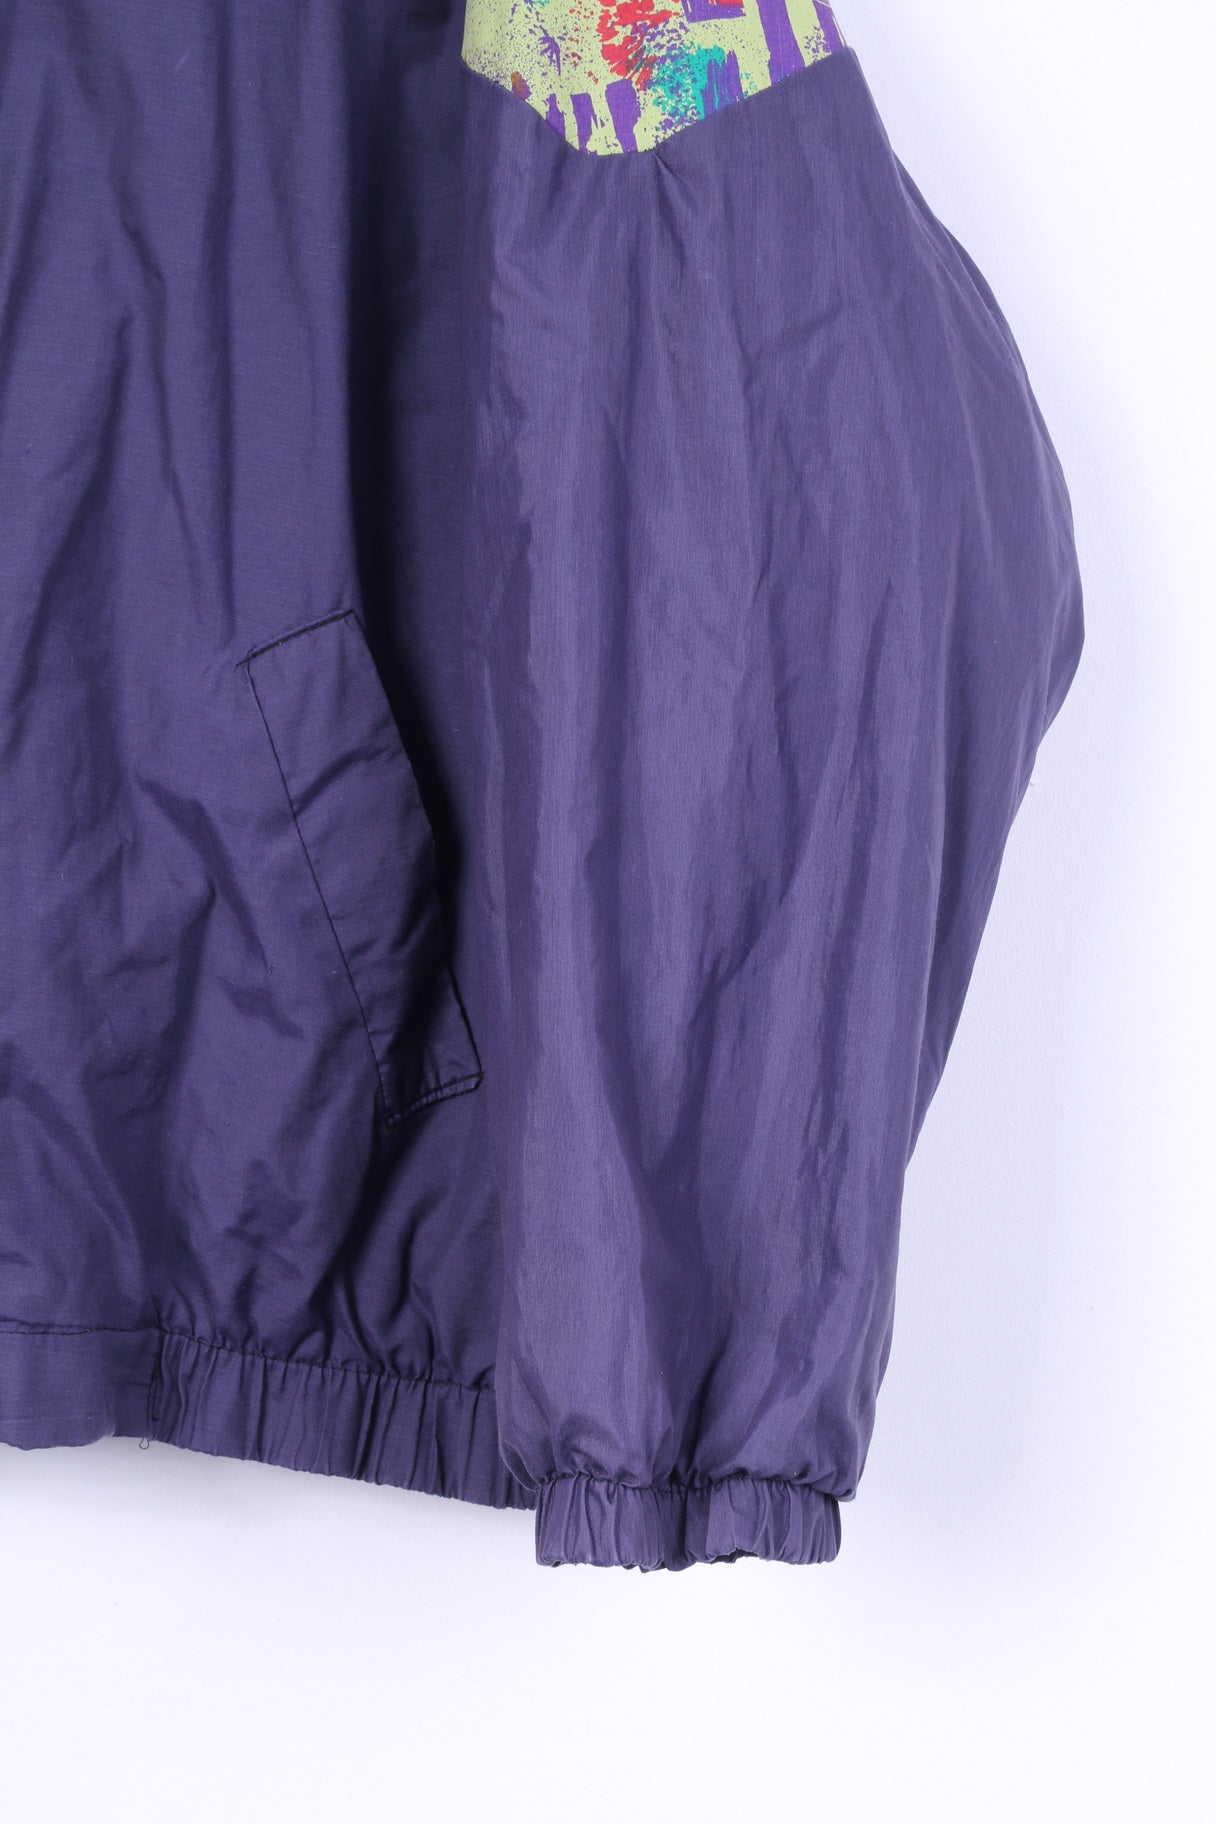 Retro Men L Jacket Purple Festival Padded Zippered Cotton Blend Bomber